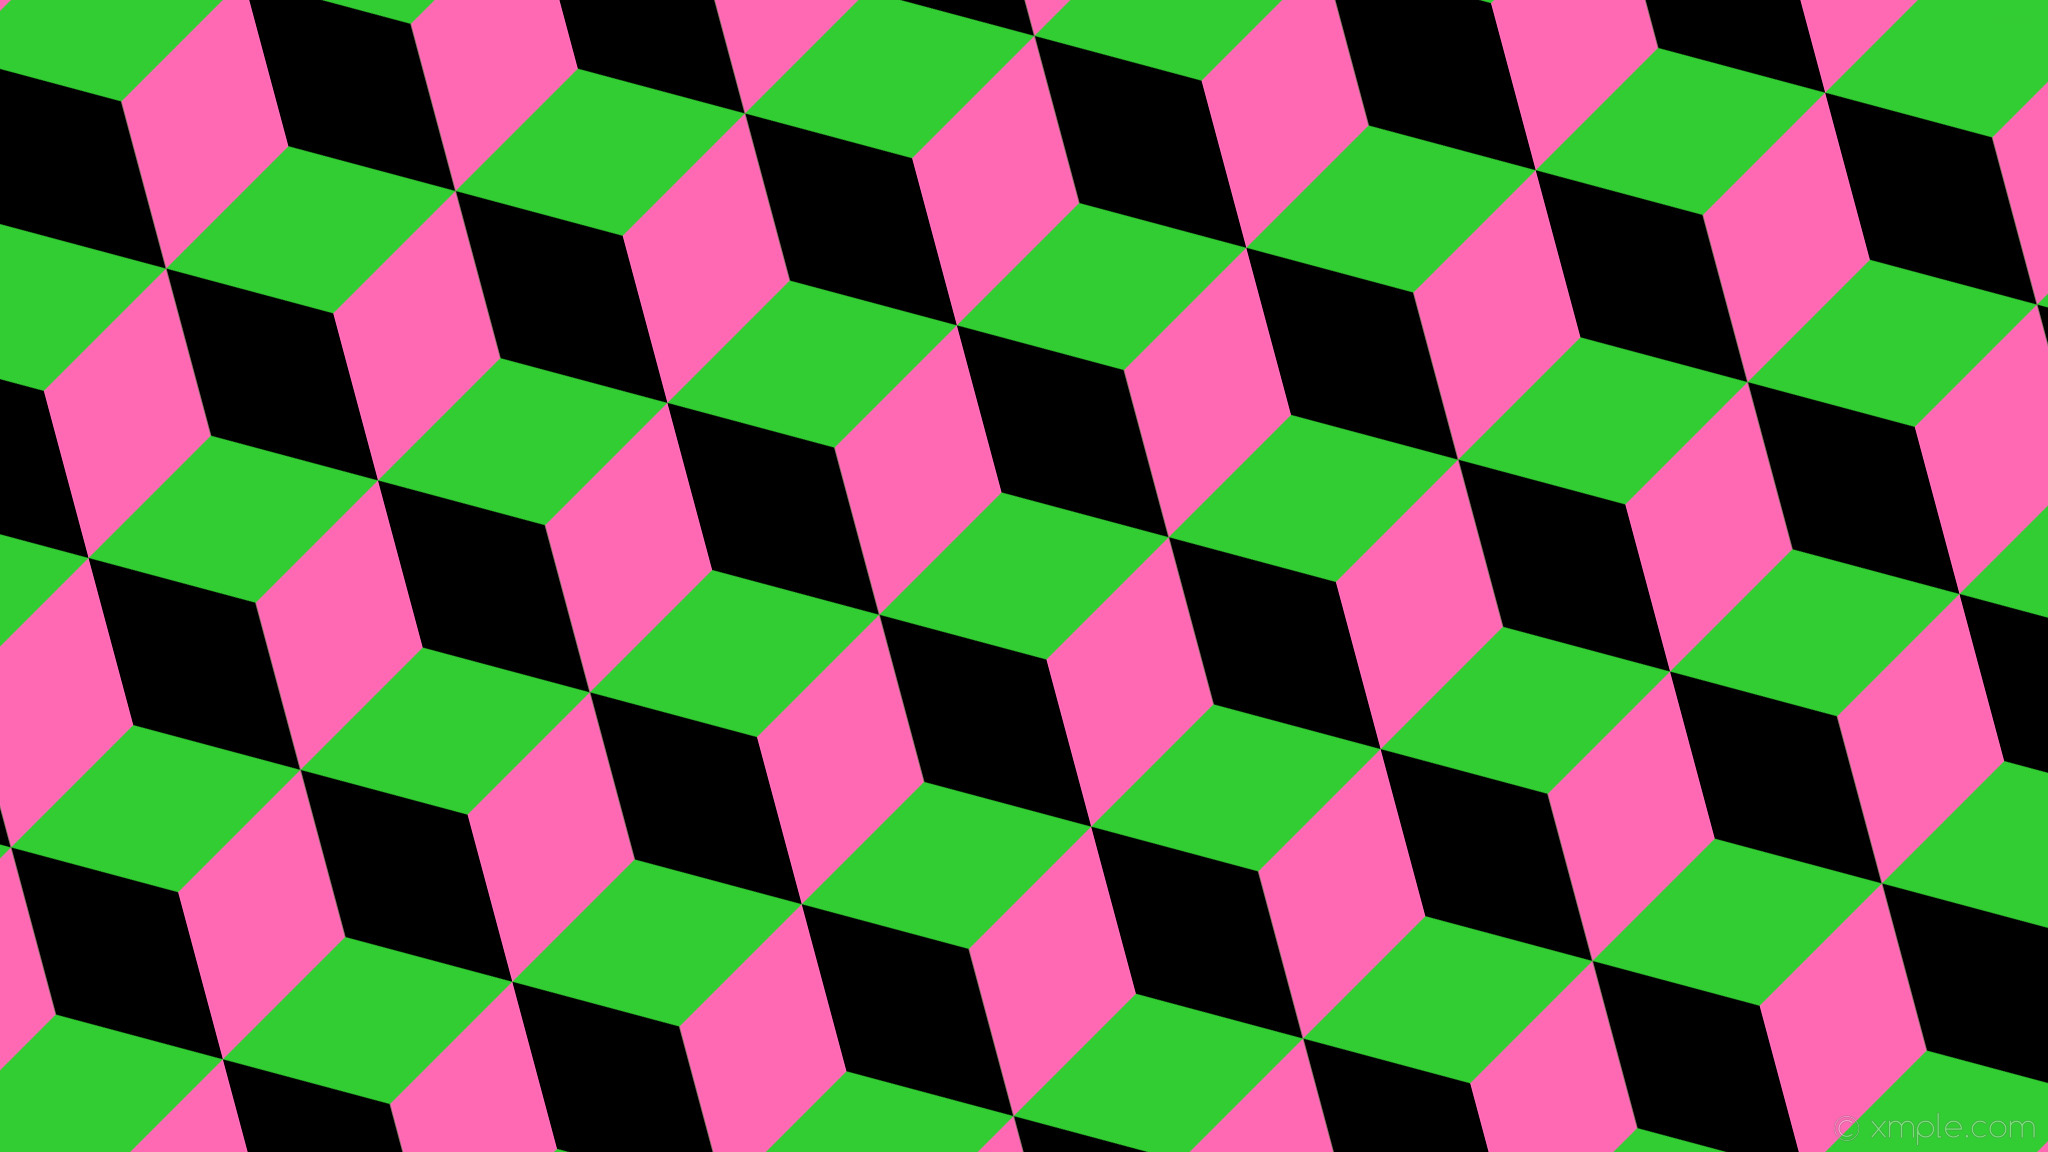 2048x1152 wallpaper green pink black 3d cubes lime green hot pink #32cd32 #000000  #ff69b4